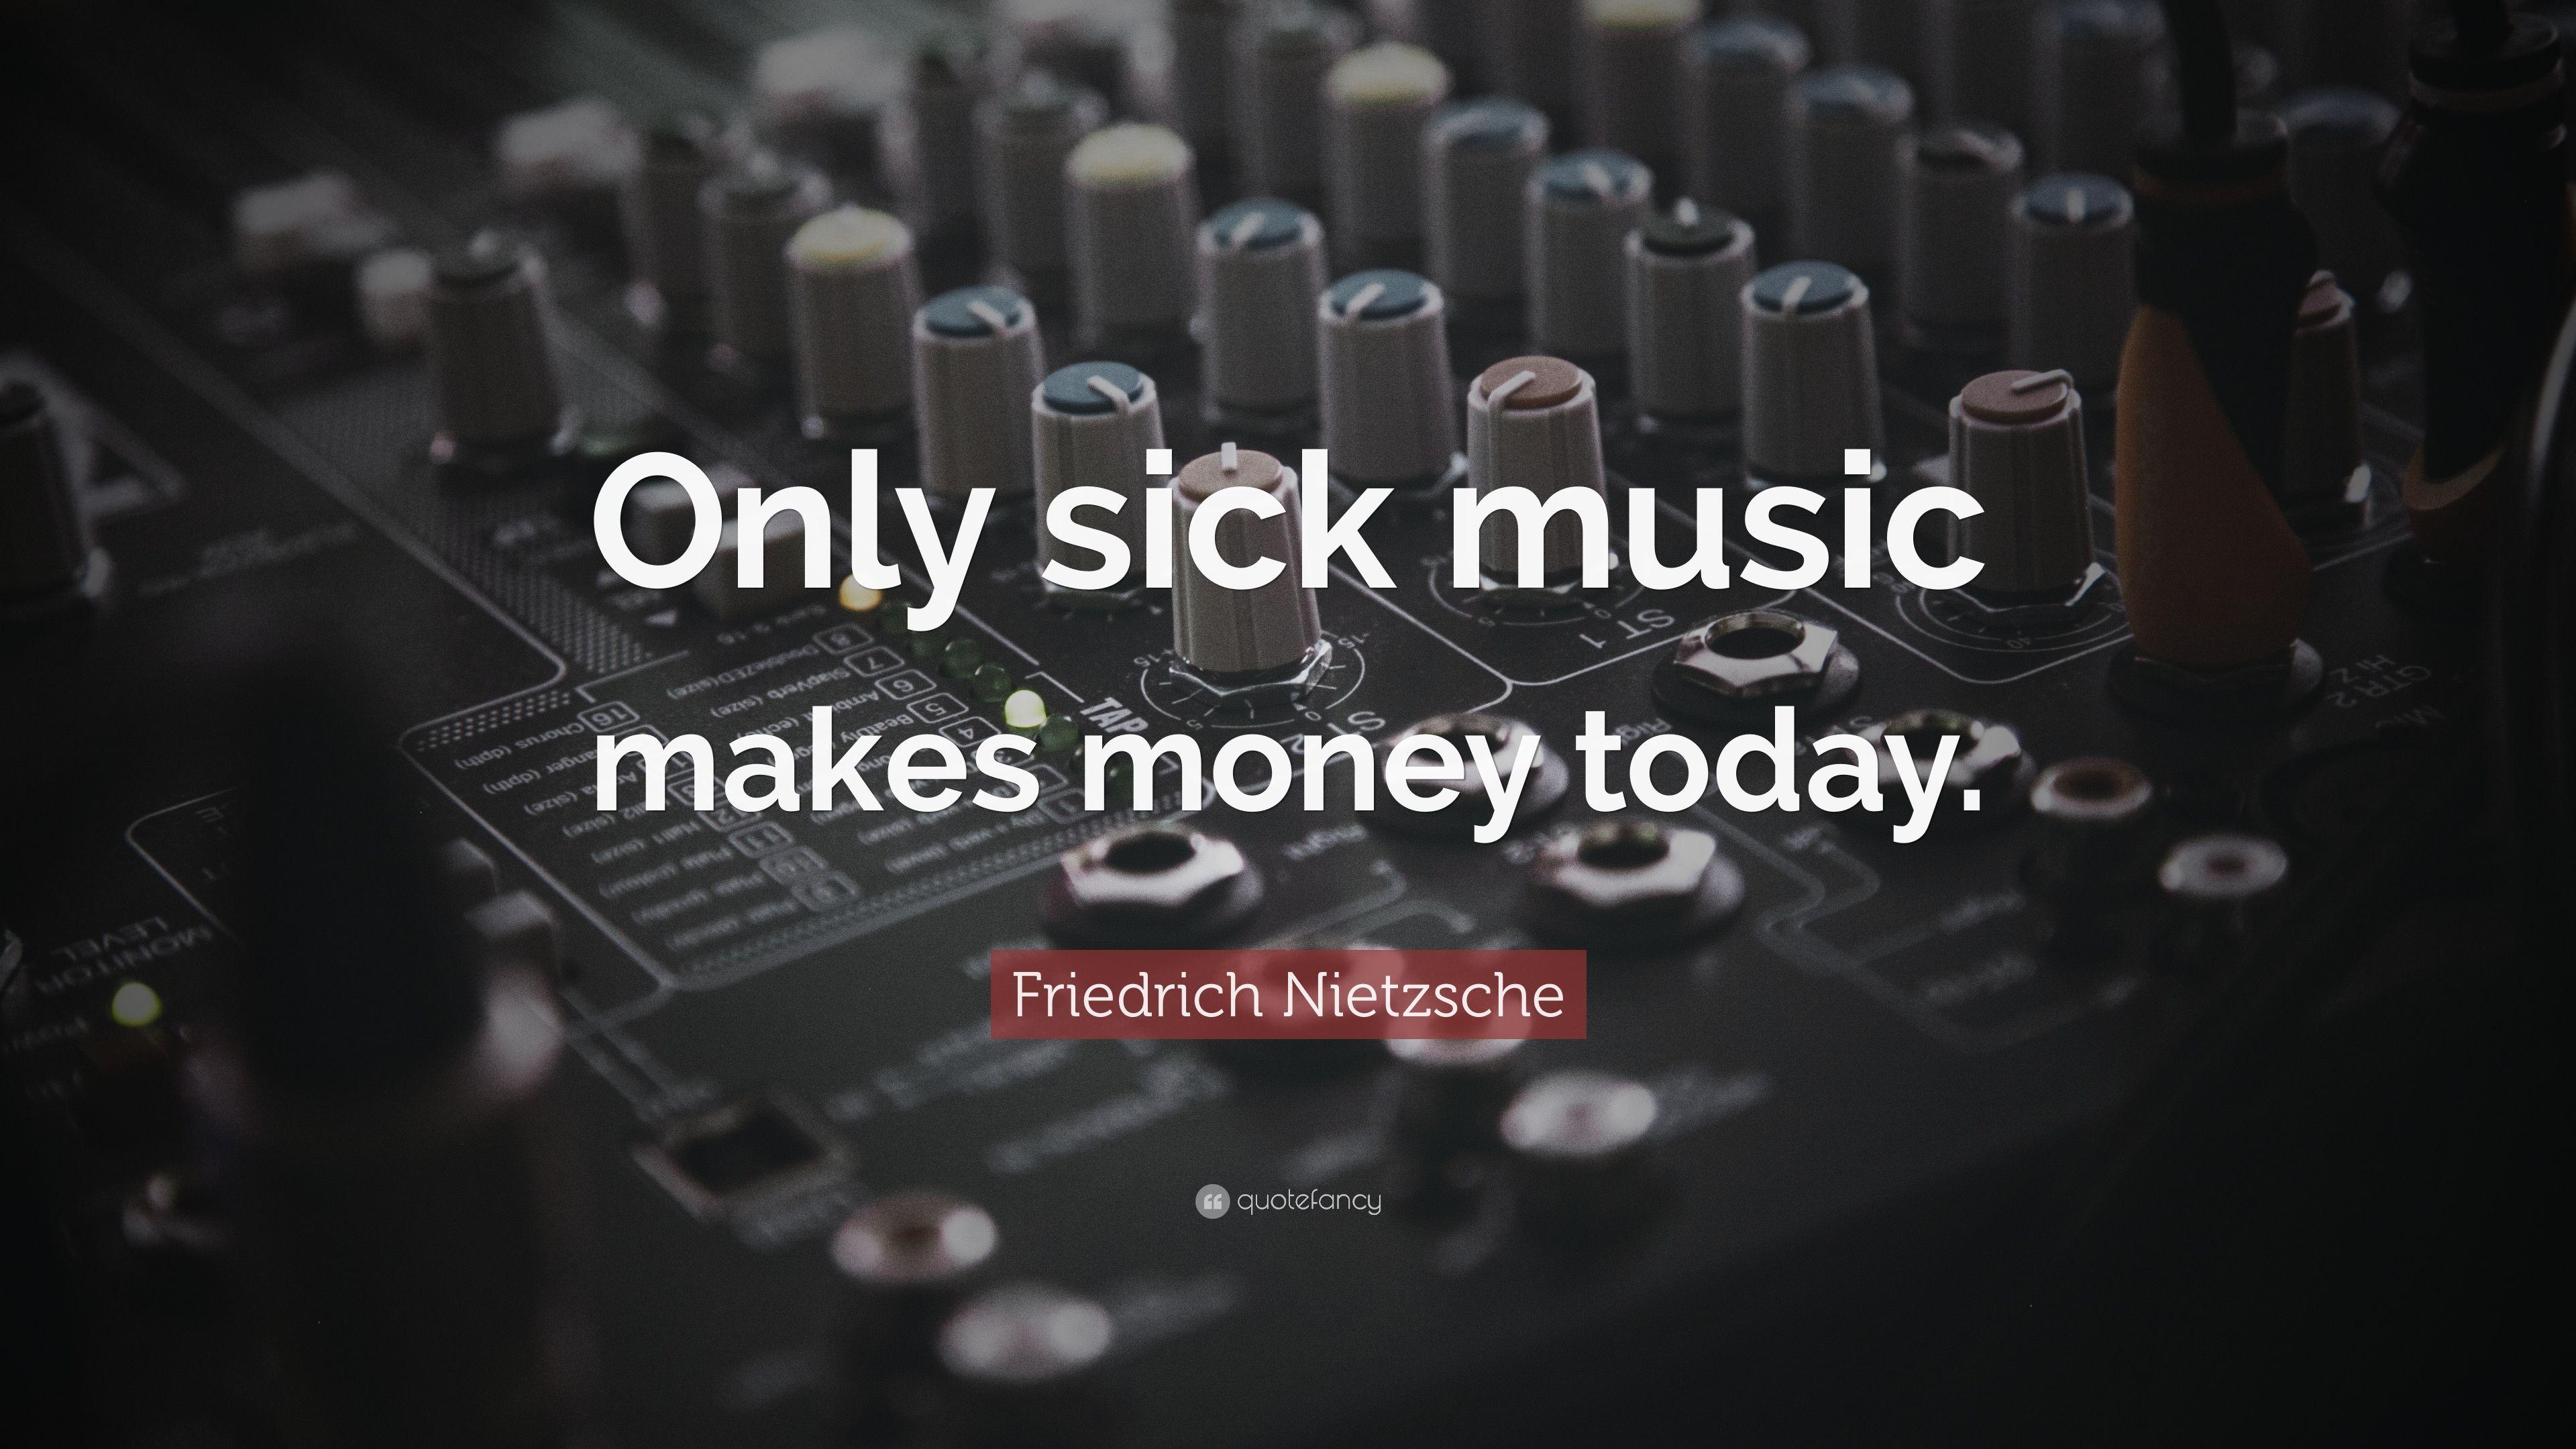 Friedrich Nietzsche Quote: “Only sick music makes money today